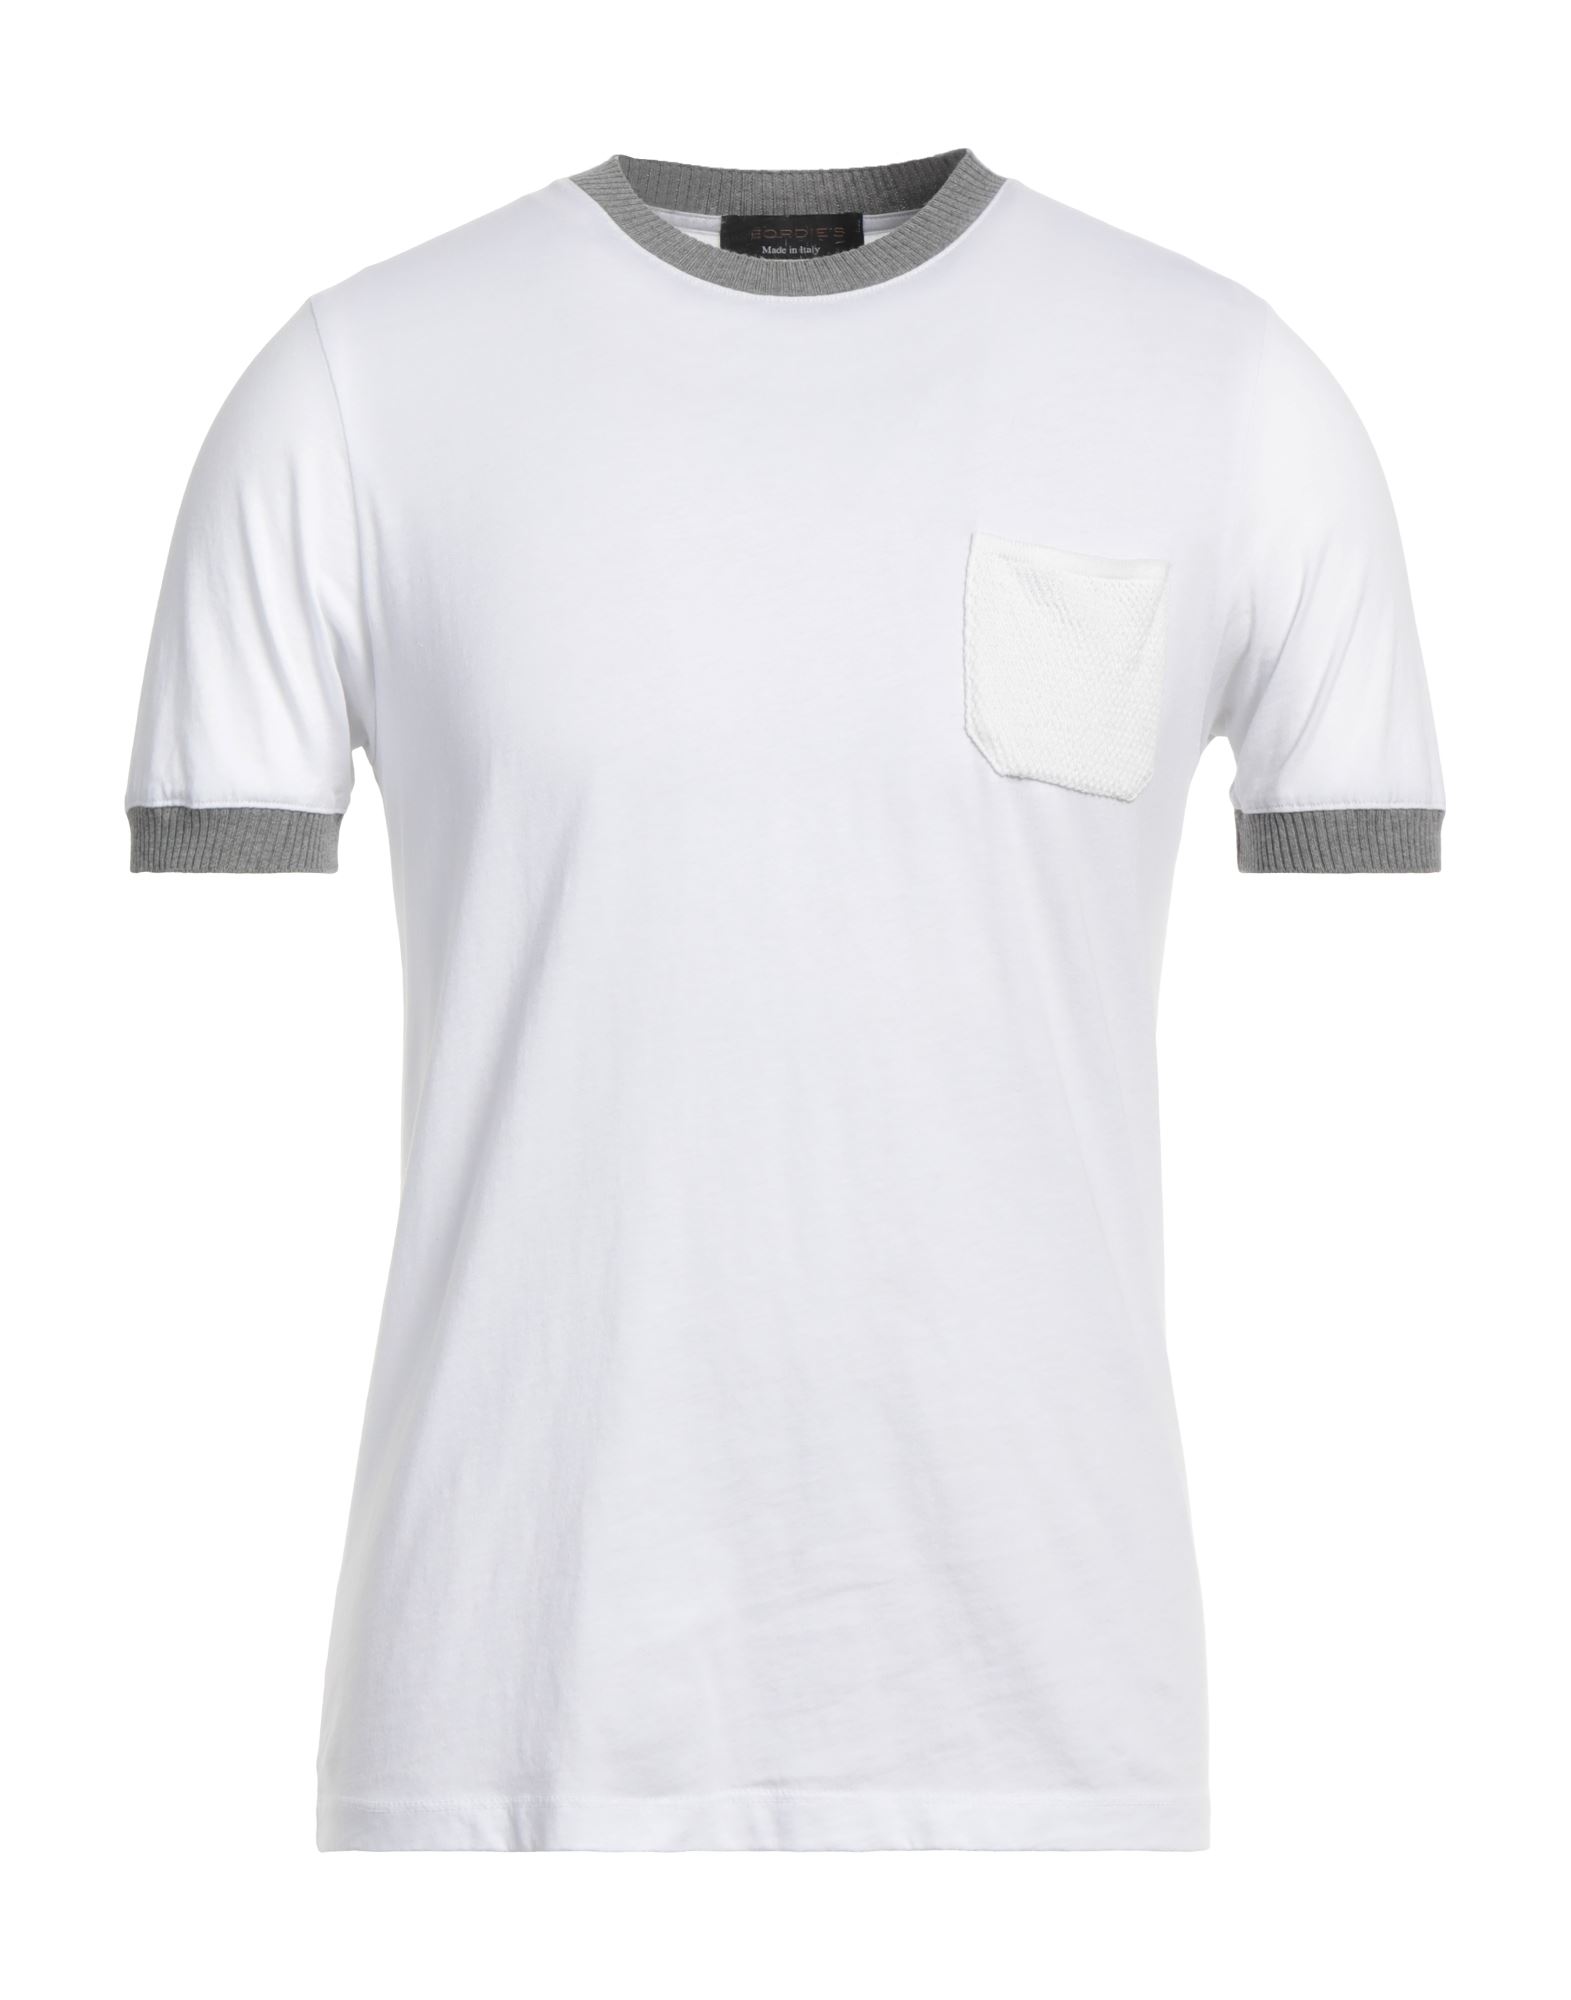 Jeordie's Man T-shirt White Size S Cotton